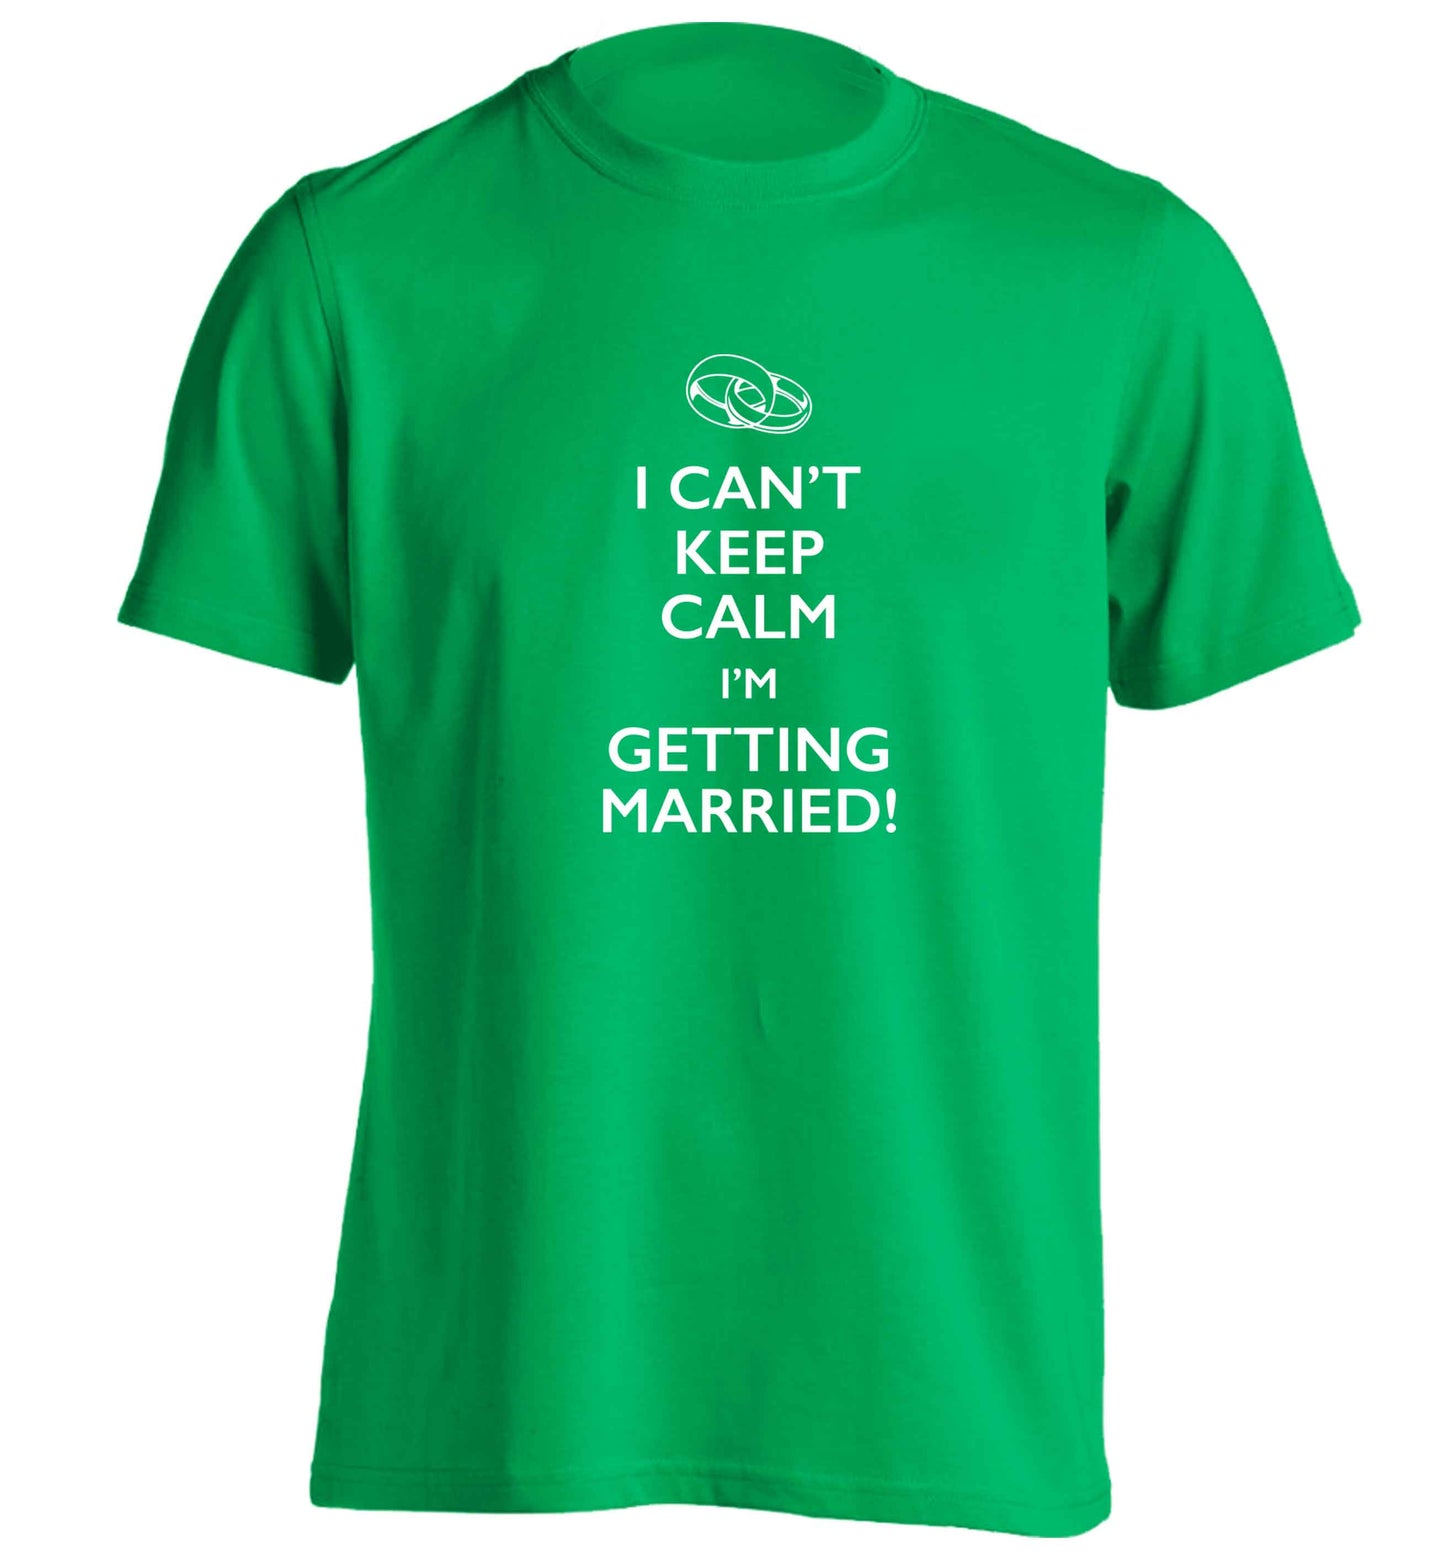 I can't keep calm I'm getting married! adults unisex green Tshirt 2XL